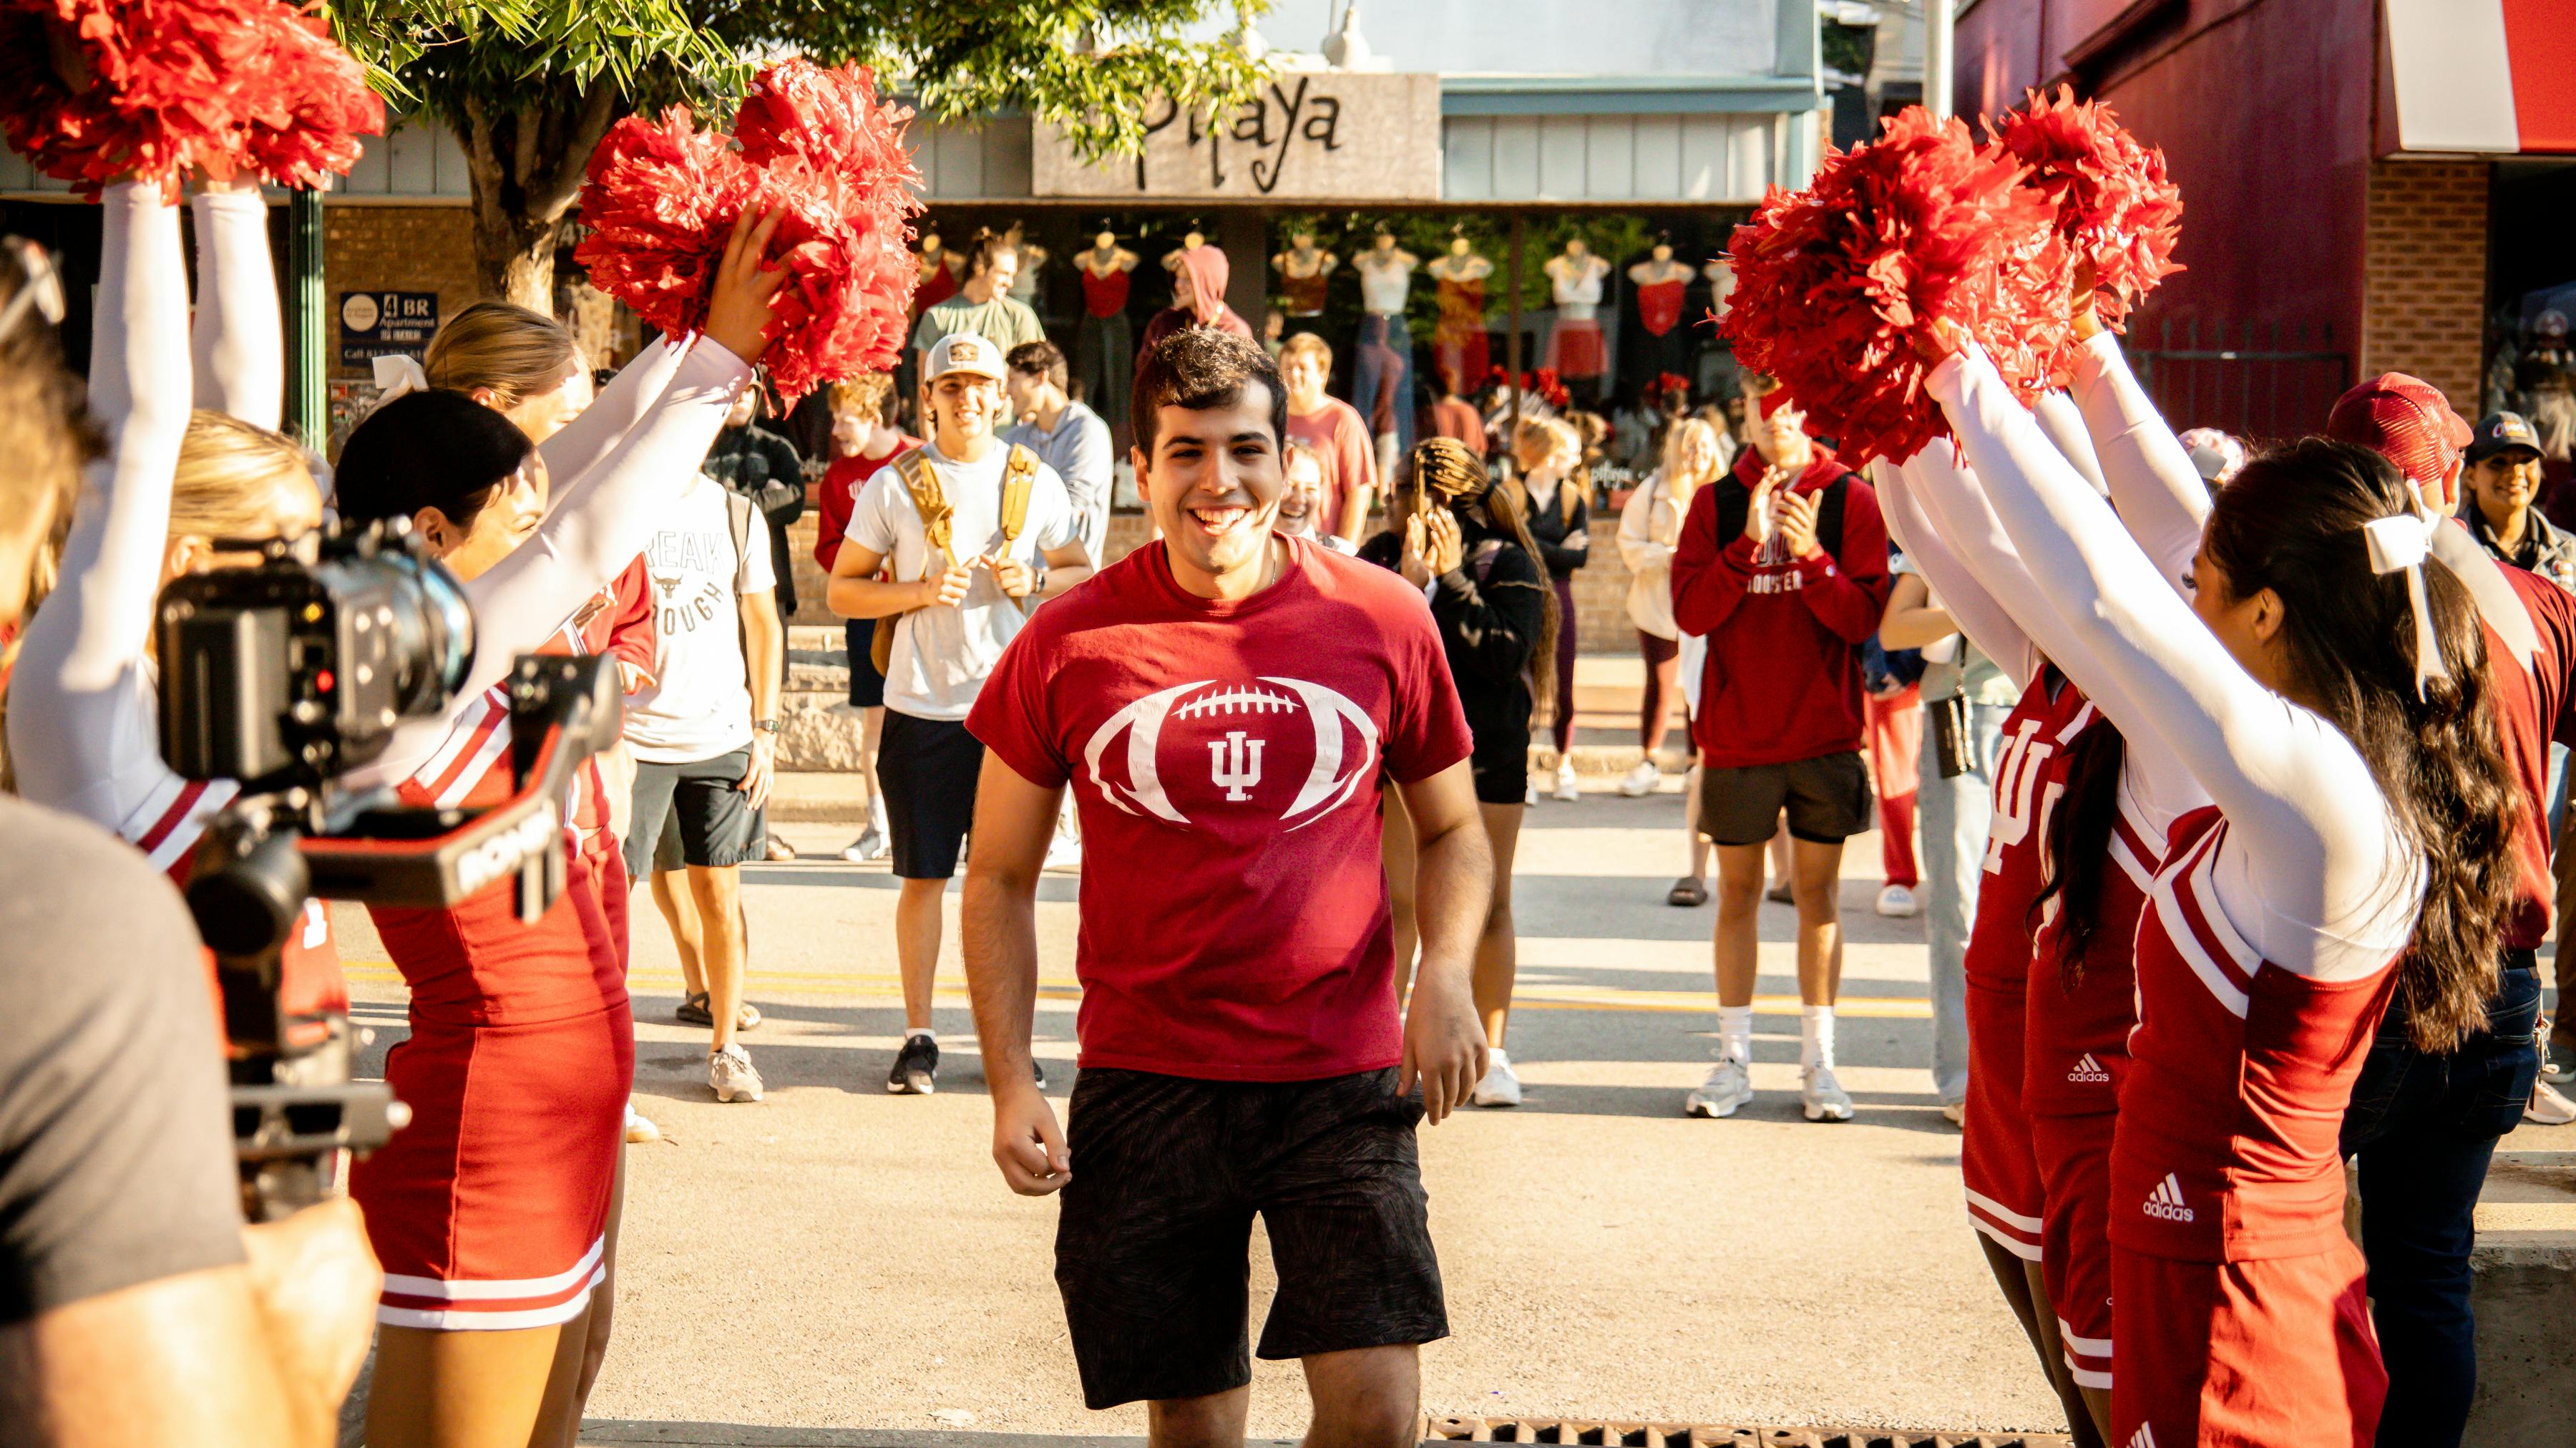 Indiana University Cheerleaders helping celebrate on grand opening day